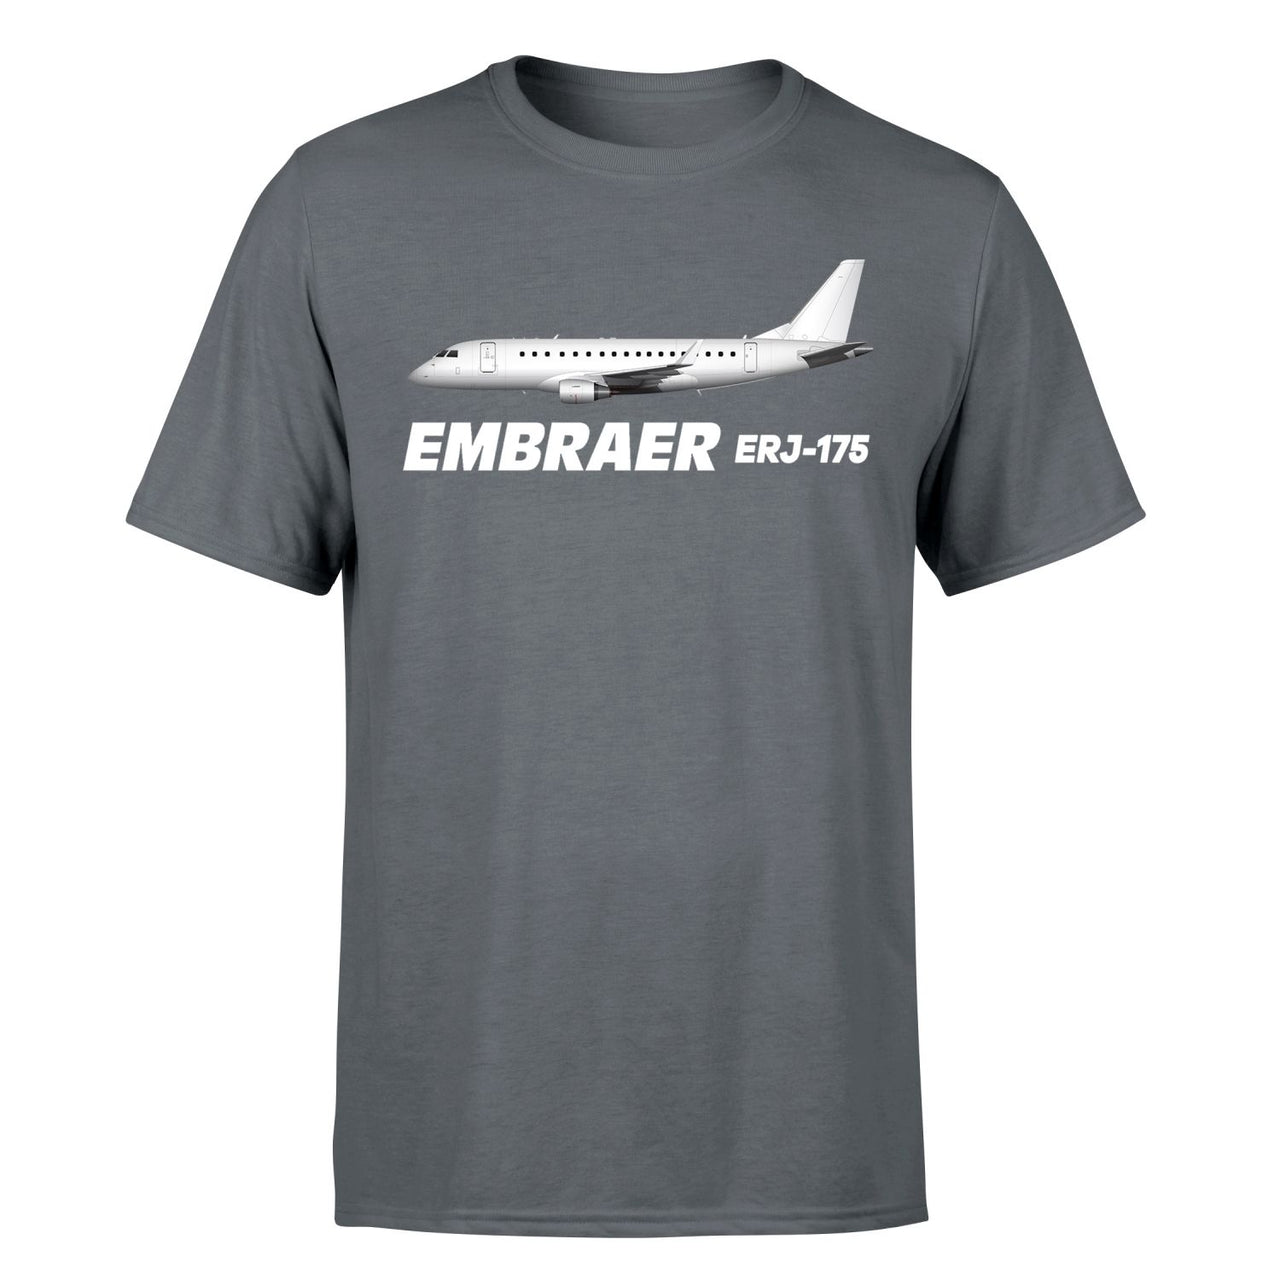 The Embraer ERJ-175 Designed T-Shirts